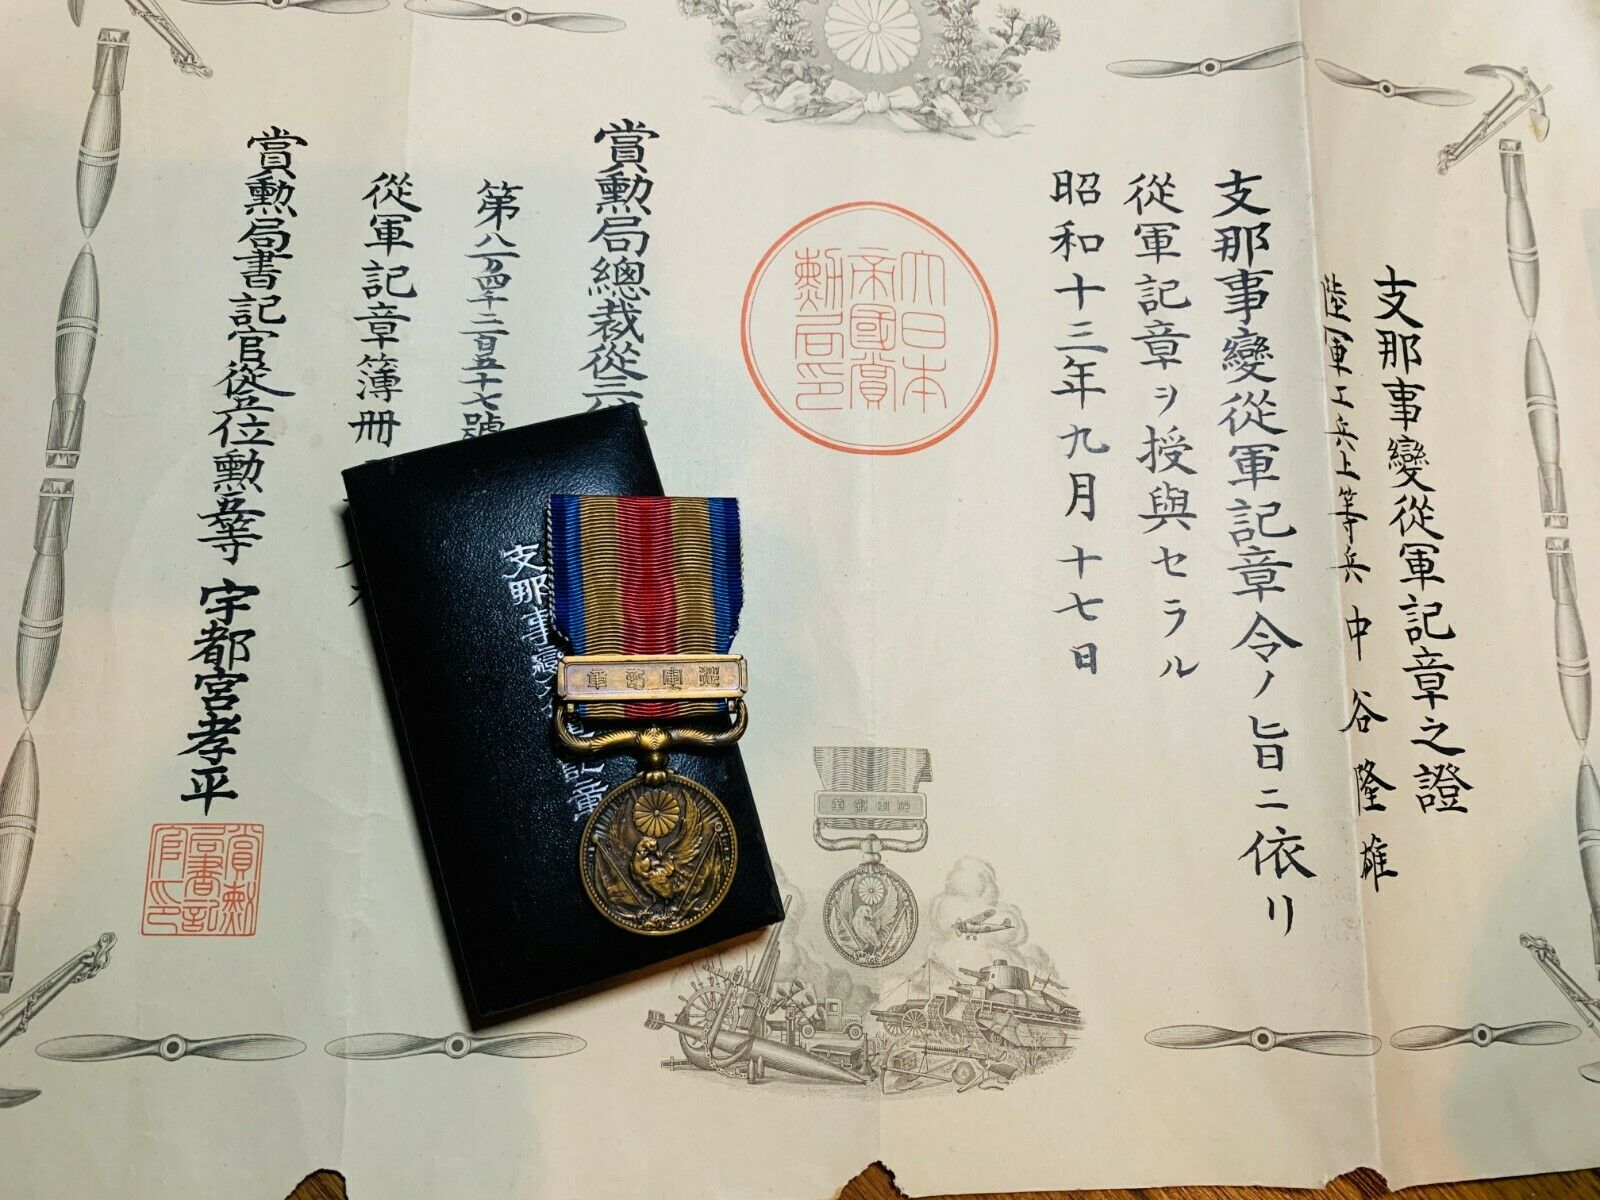 China Incident Medal.jpg